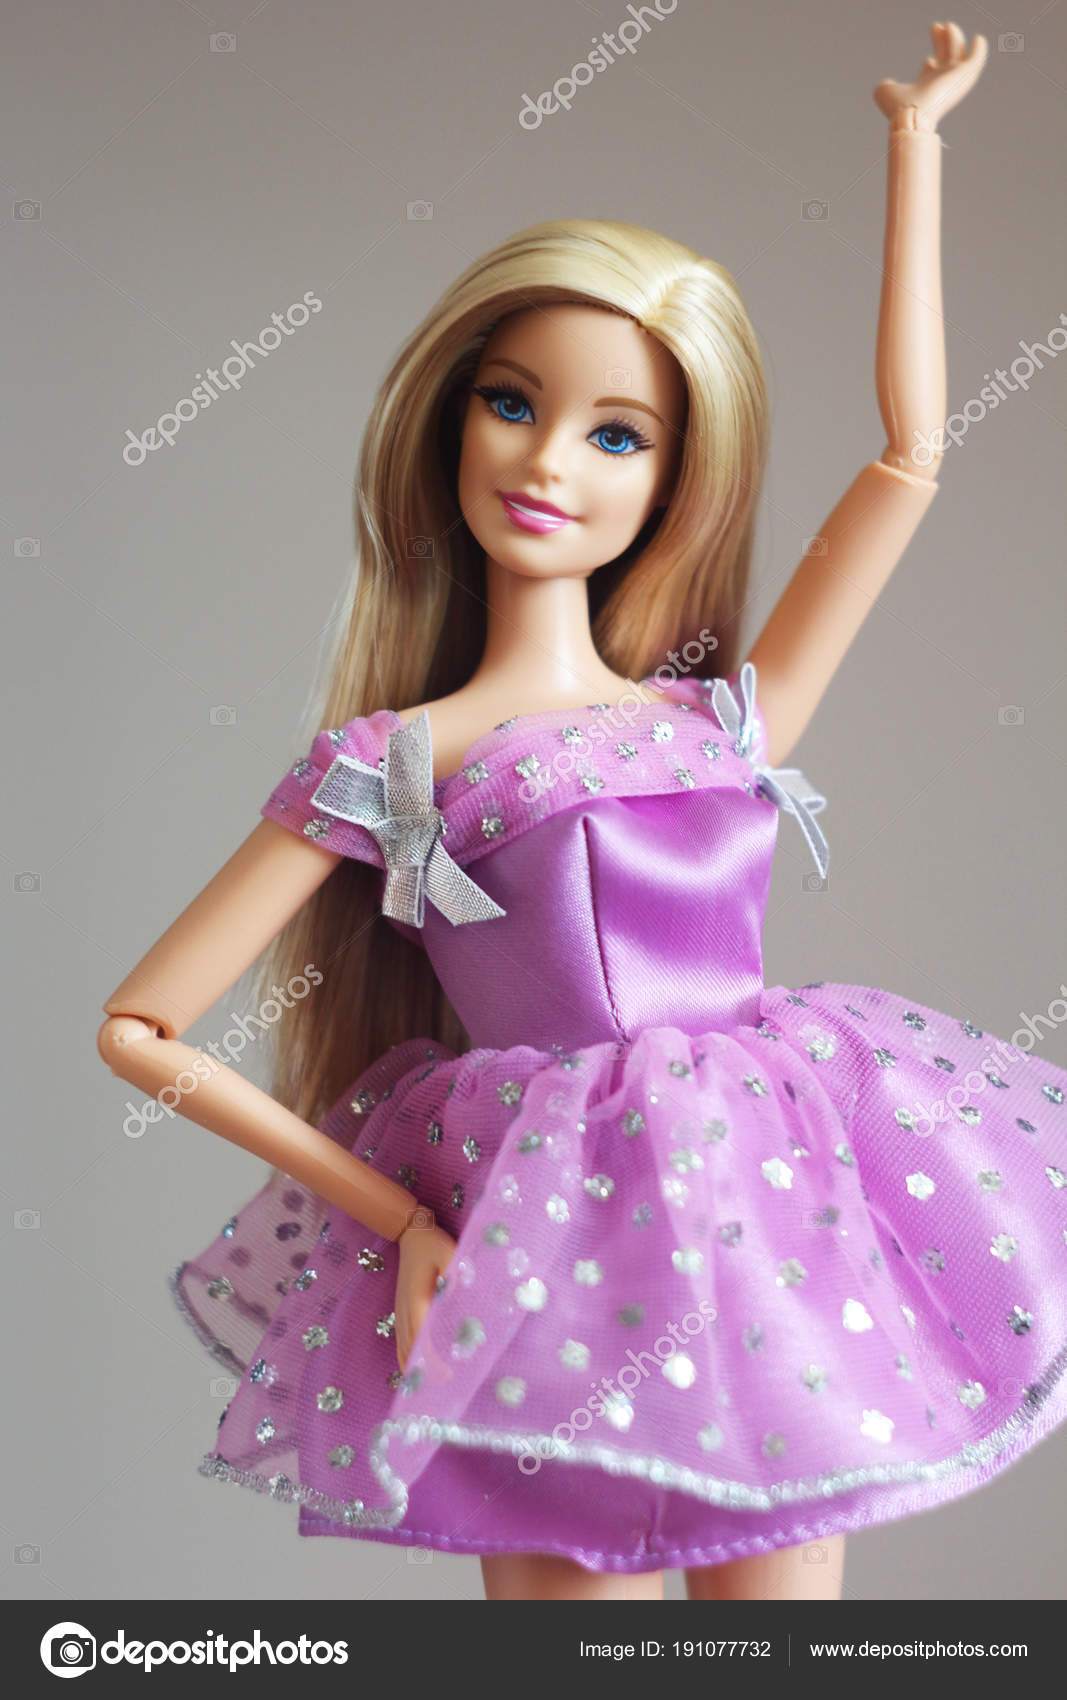 BarbieStock-fotos, Barbie billeder | Depositphotos